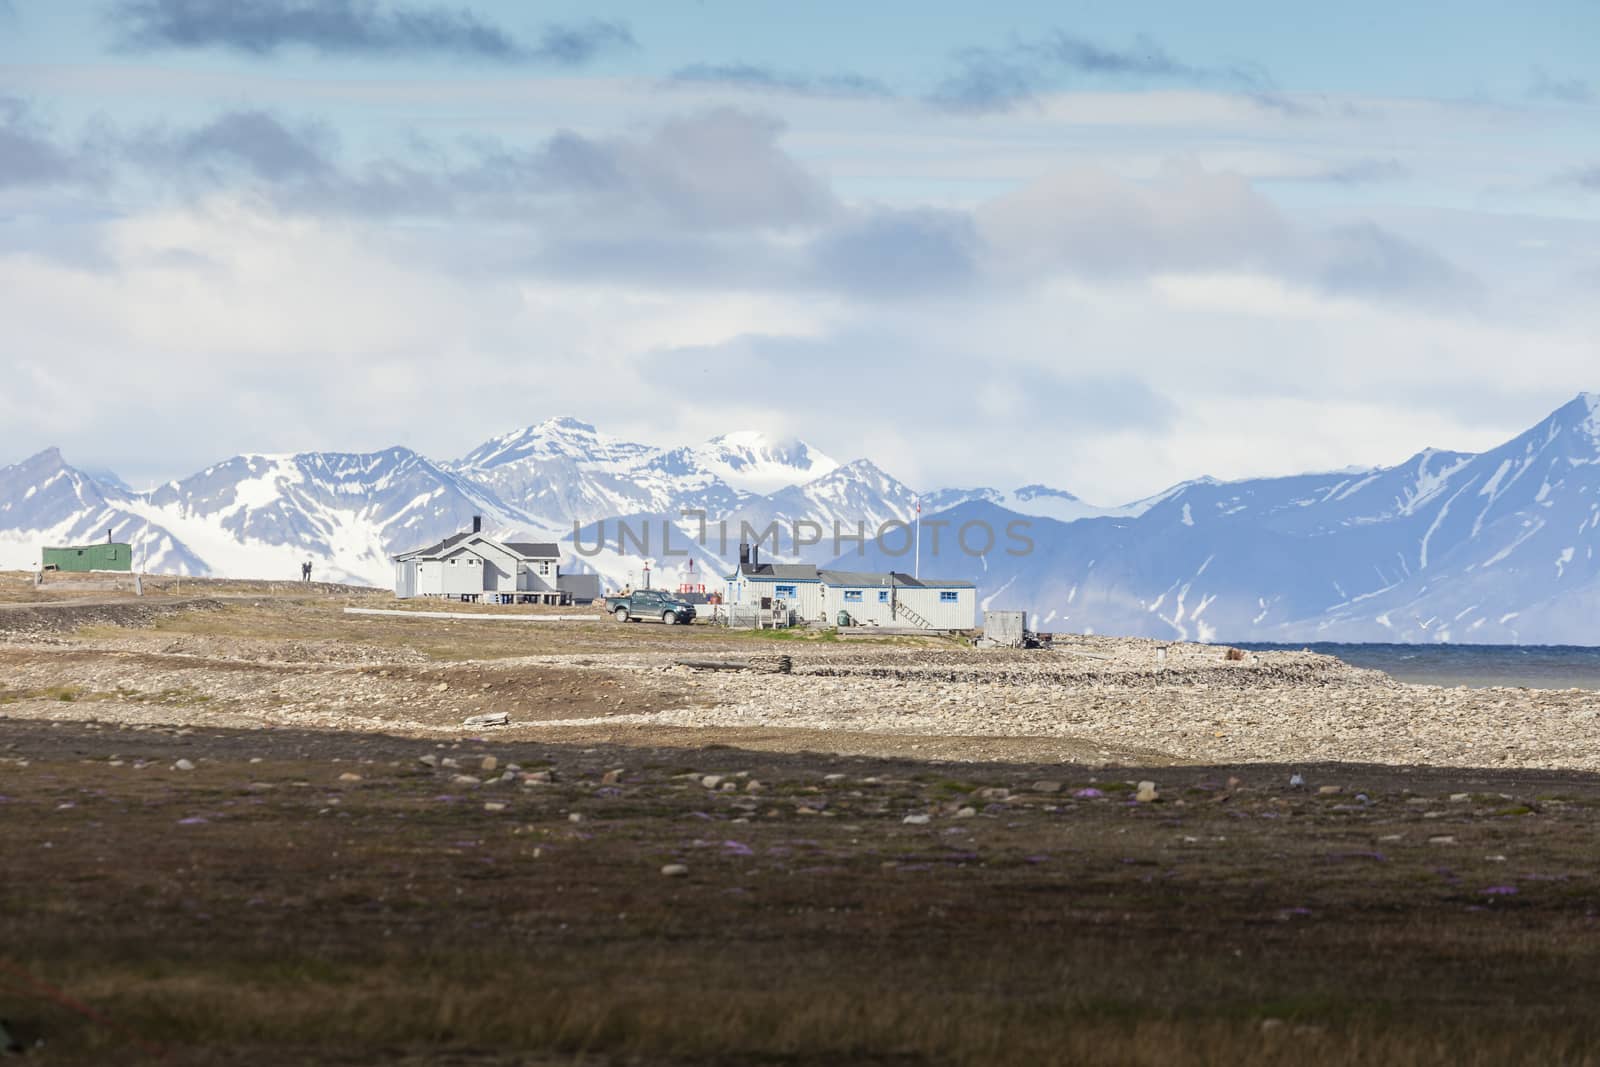 Beautiful scenic view of Longyearbyen (Svalbard island), Norway

